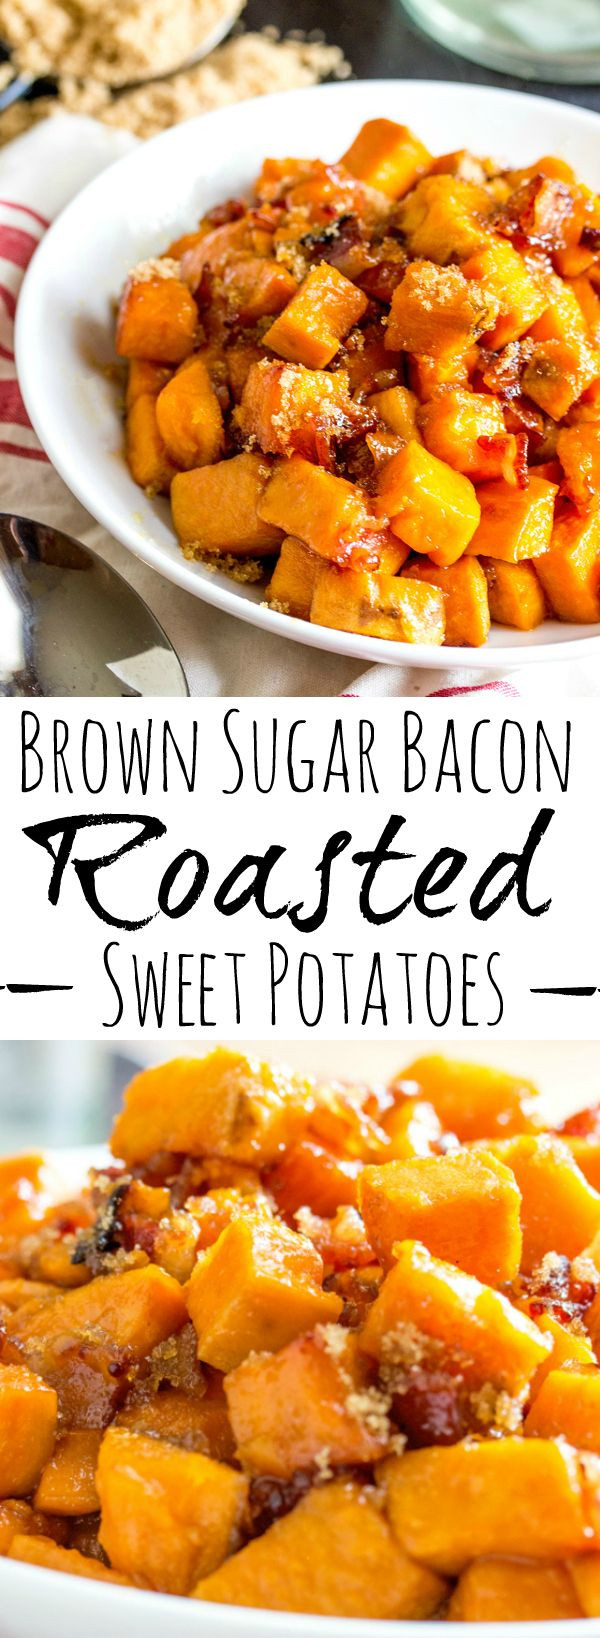 Sweet Potatoes Thanksgiving Side Dishes
 17 Best ideas about Sweet Potato Casserole on Pinterest